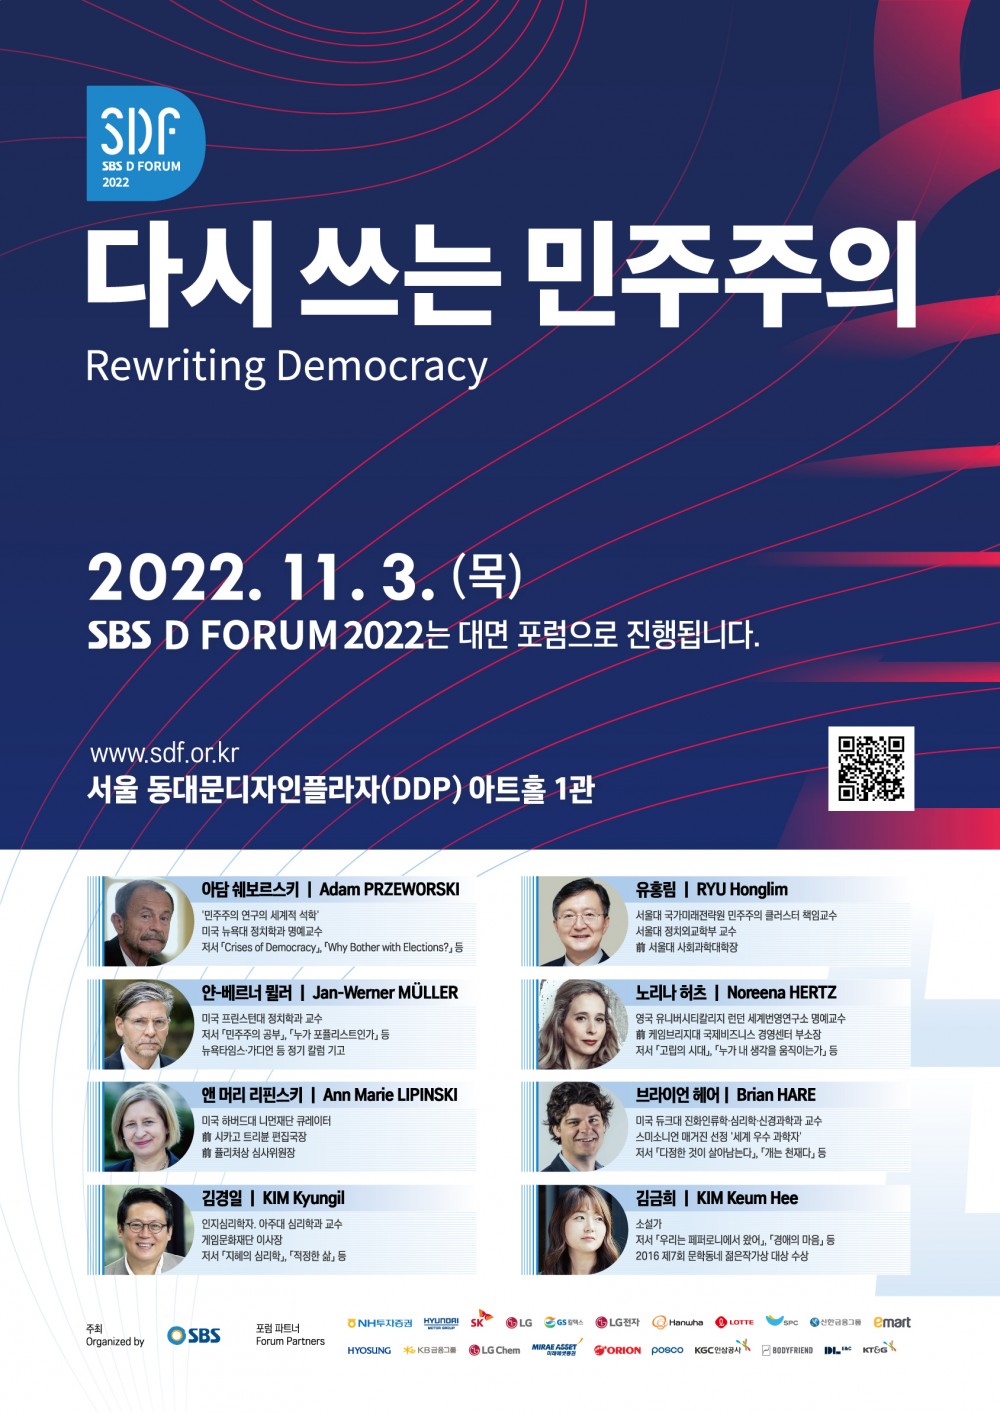 SDF 2022 포스터(22.10.14)